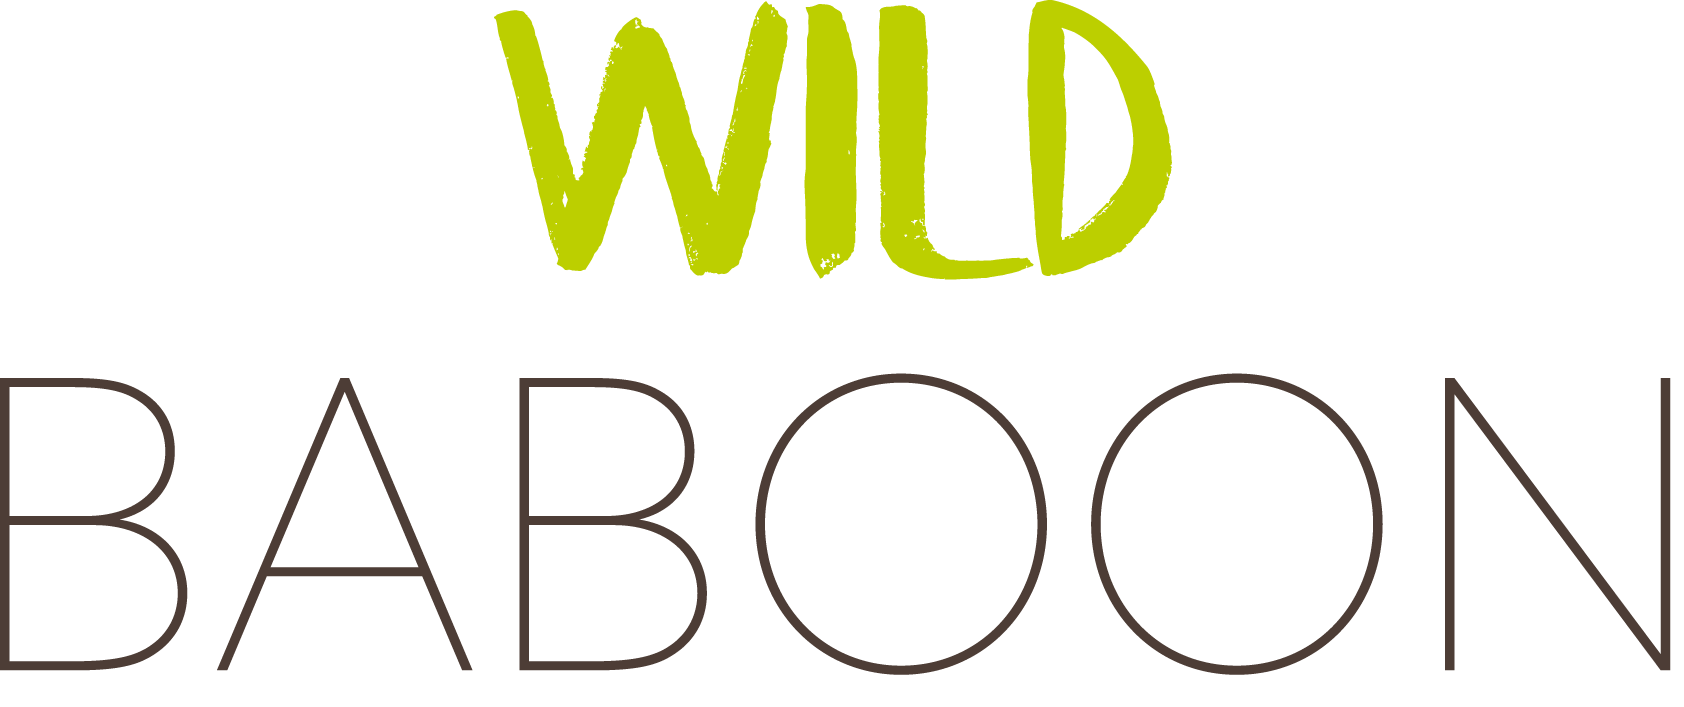 Wild Baboon GmbH